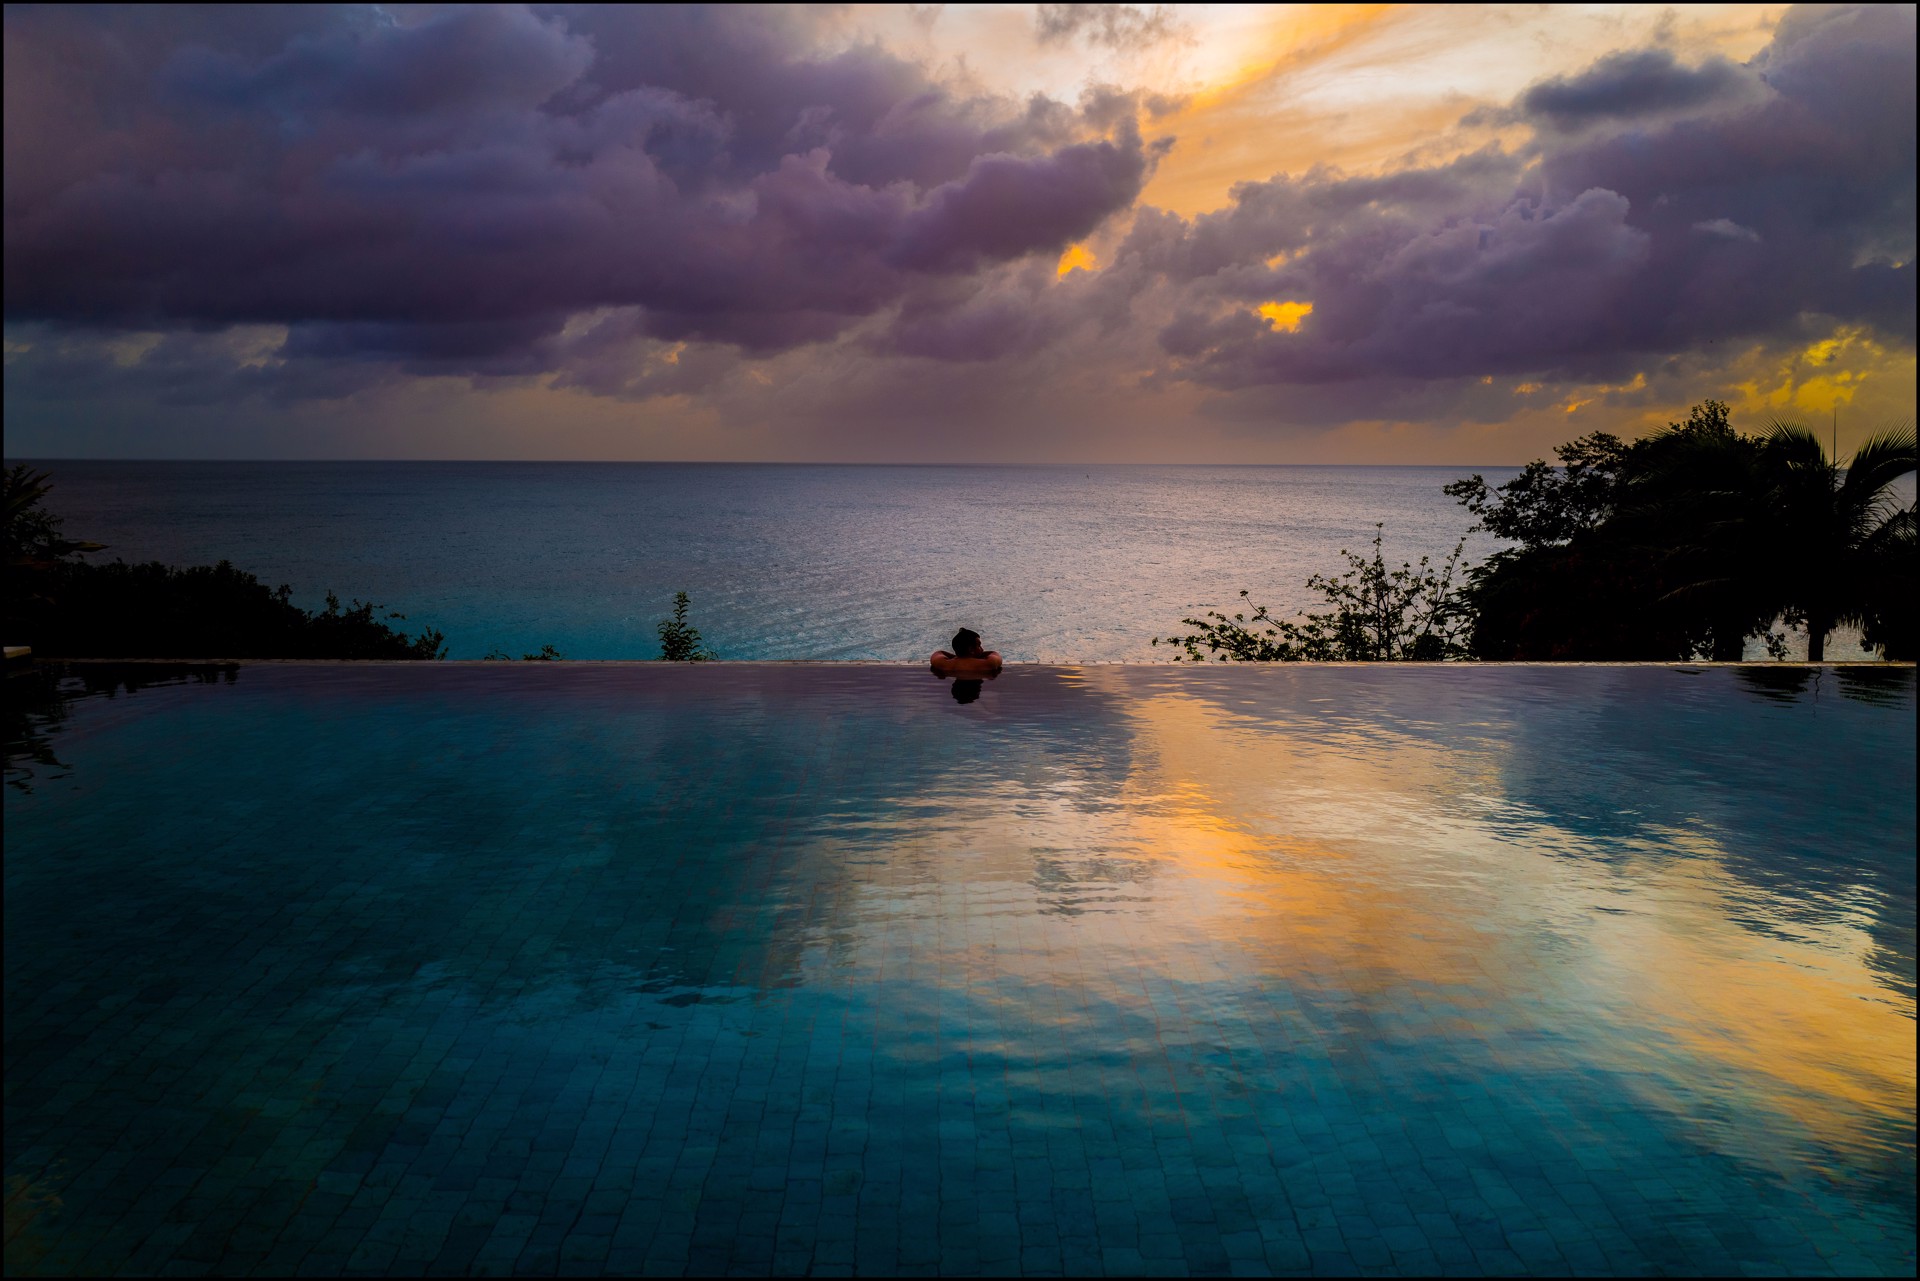 Sky & Water, Anguilla by James Hayman